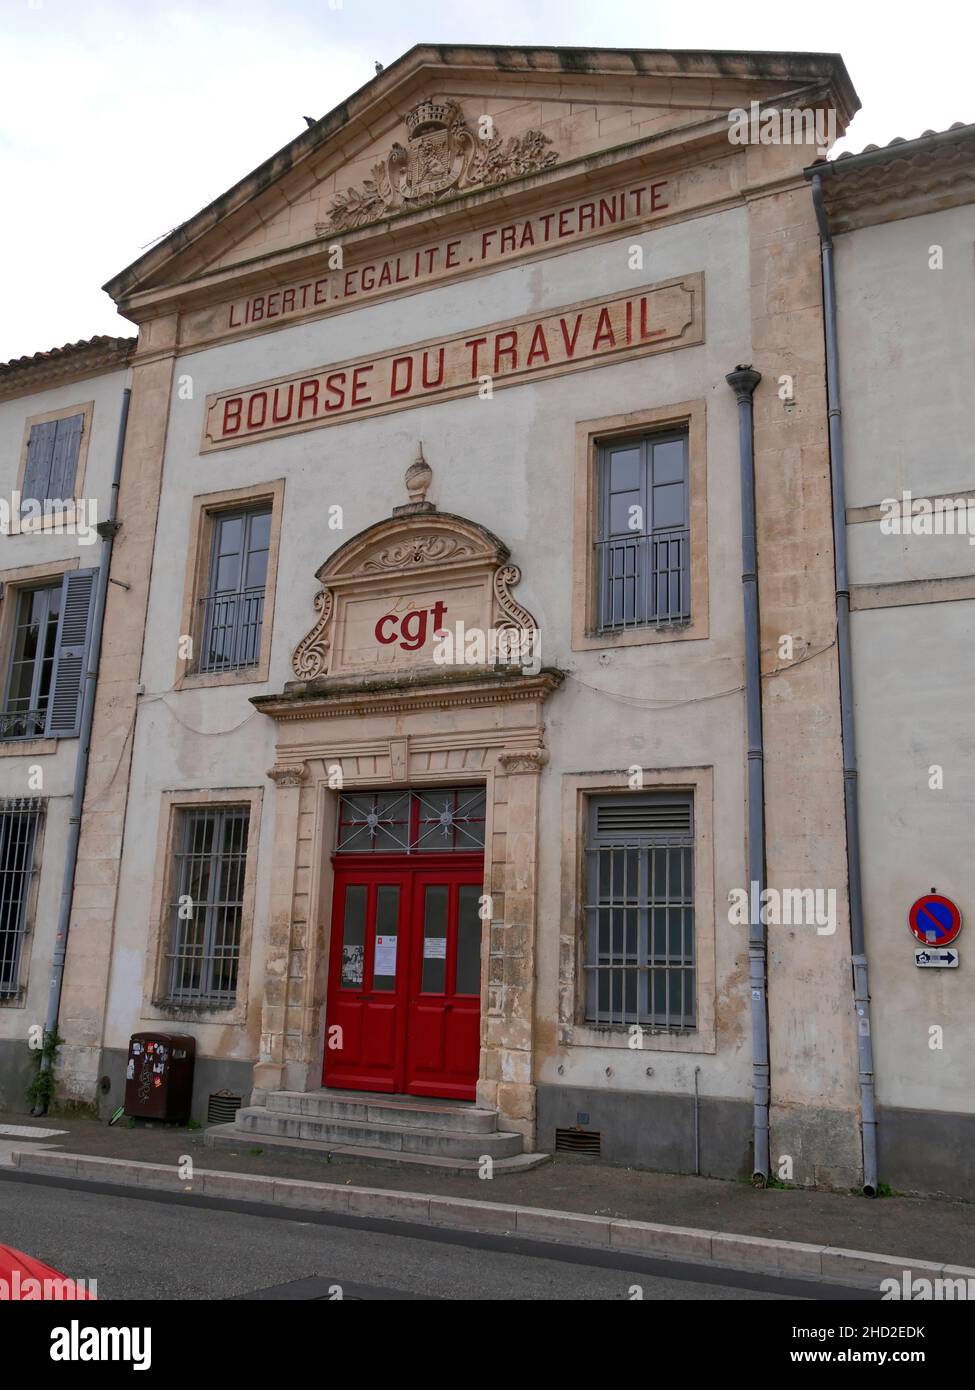 cgt, Bourse de Travail,Arles,Provence,France Stock Photo